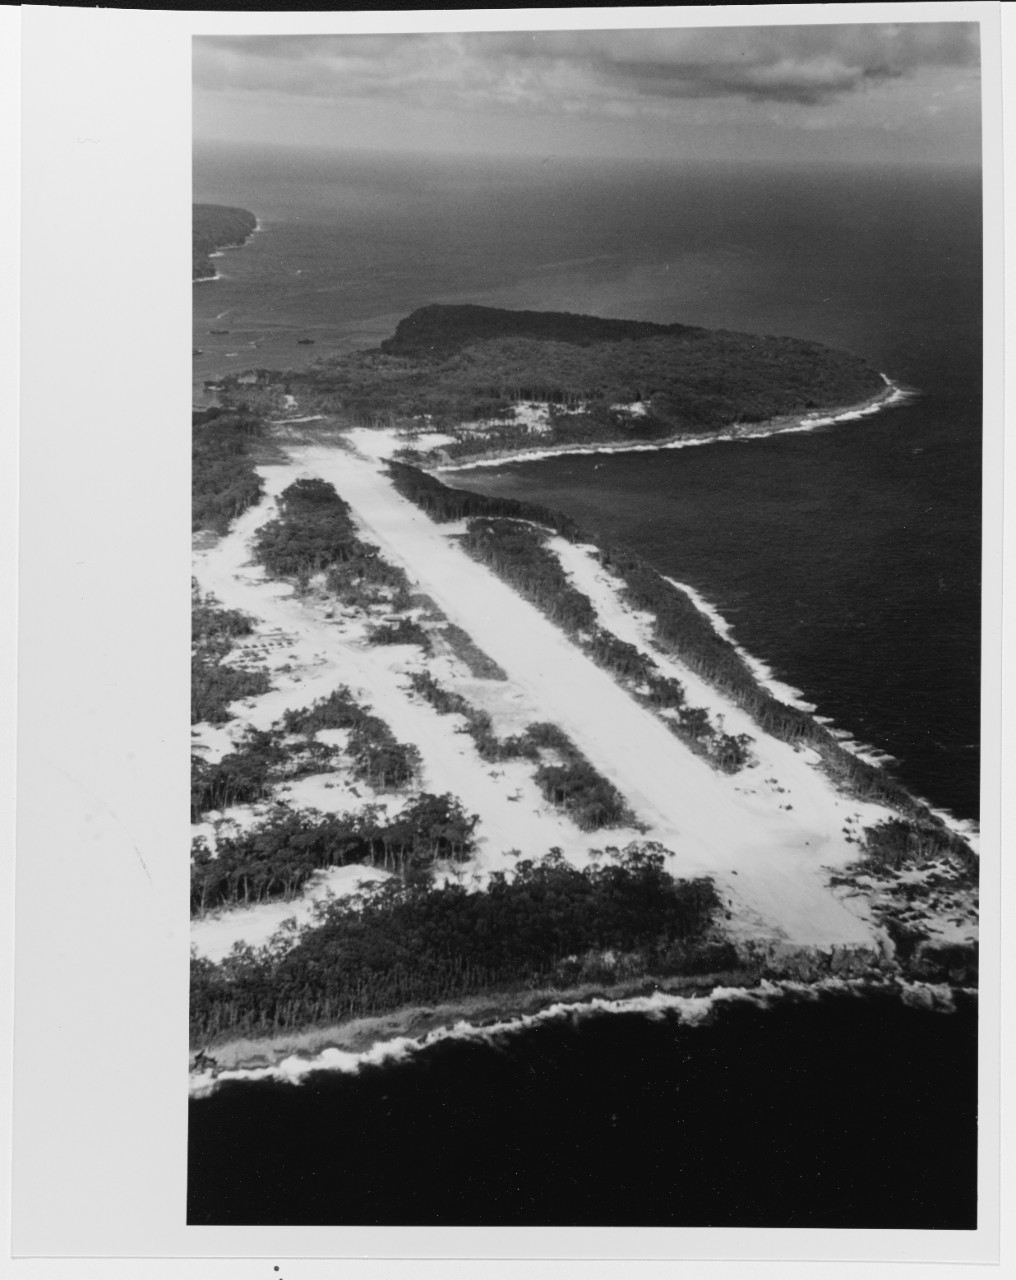 Stirling Island airfield, Treasury Island, Solomons